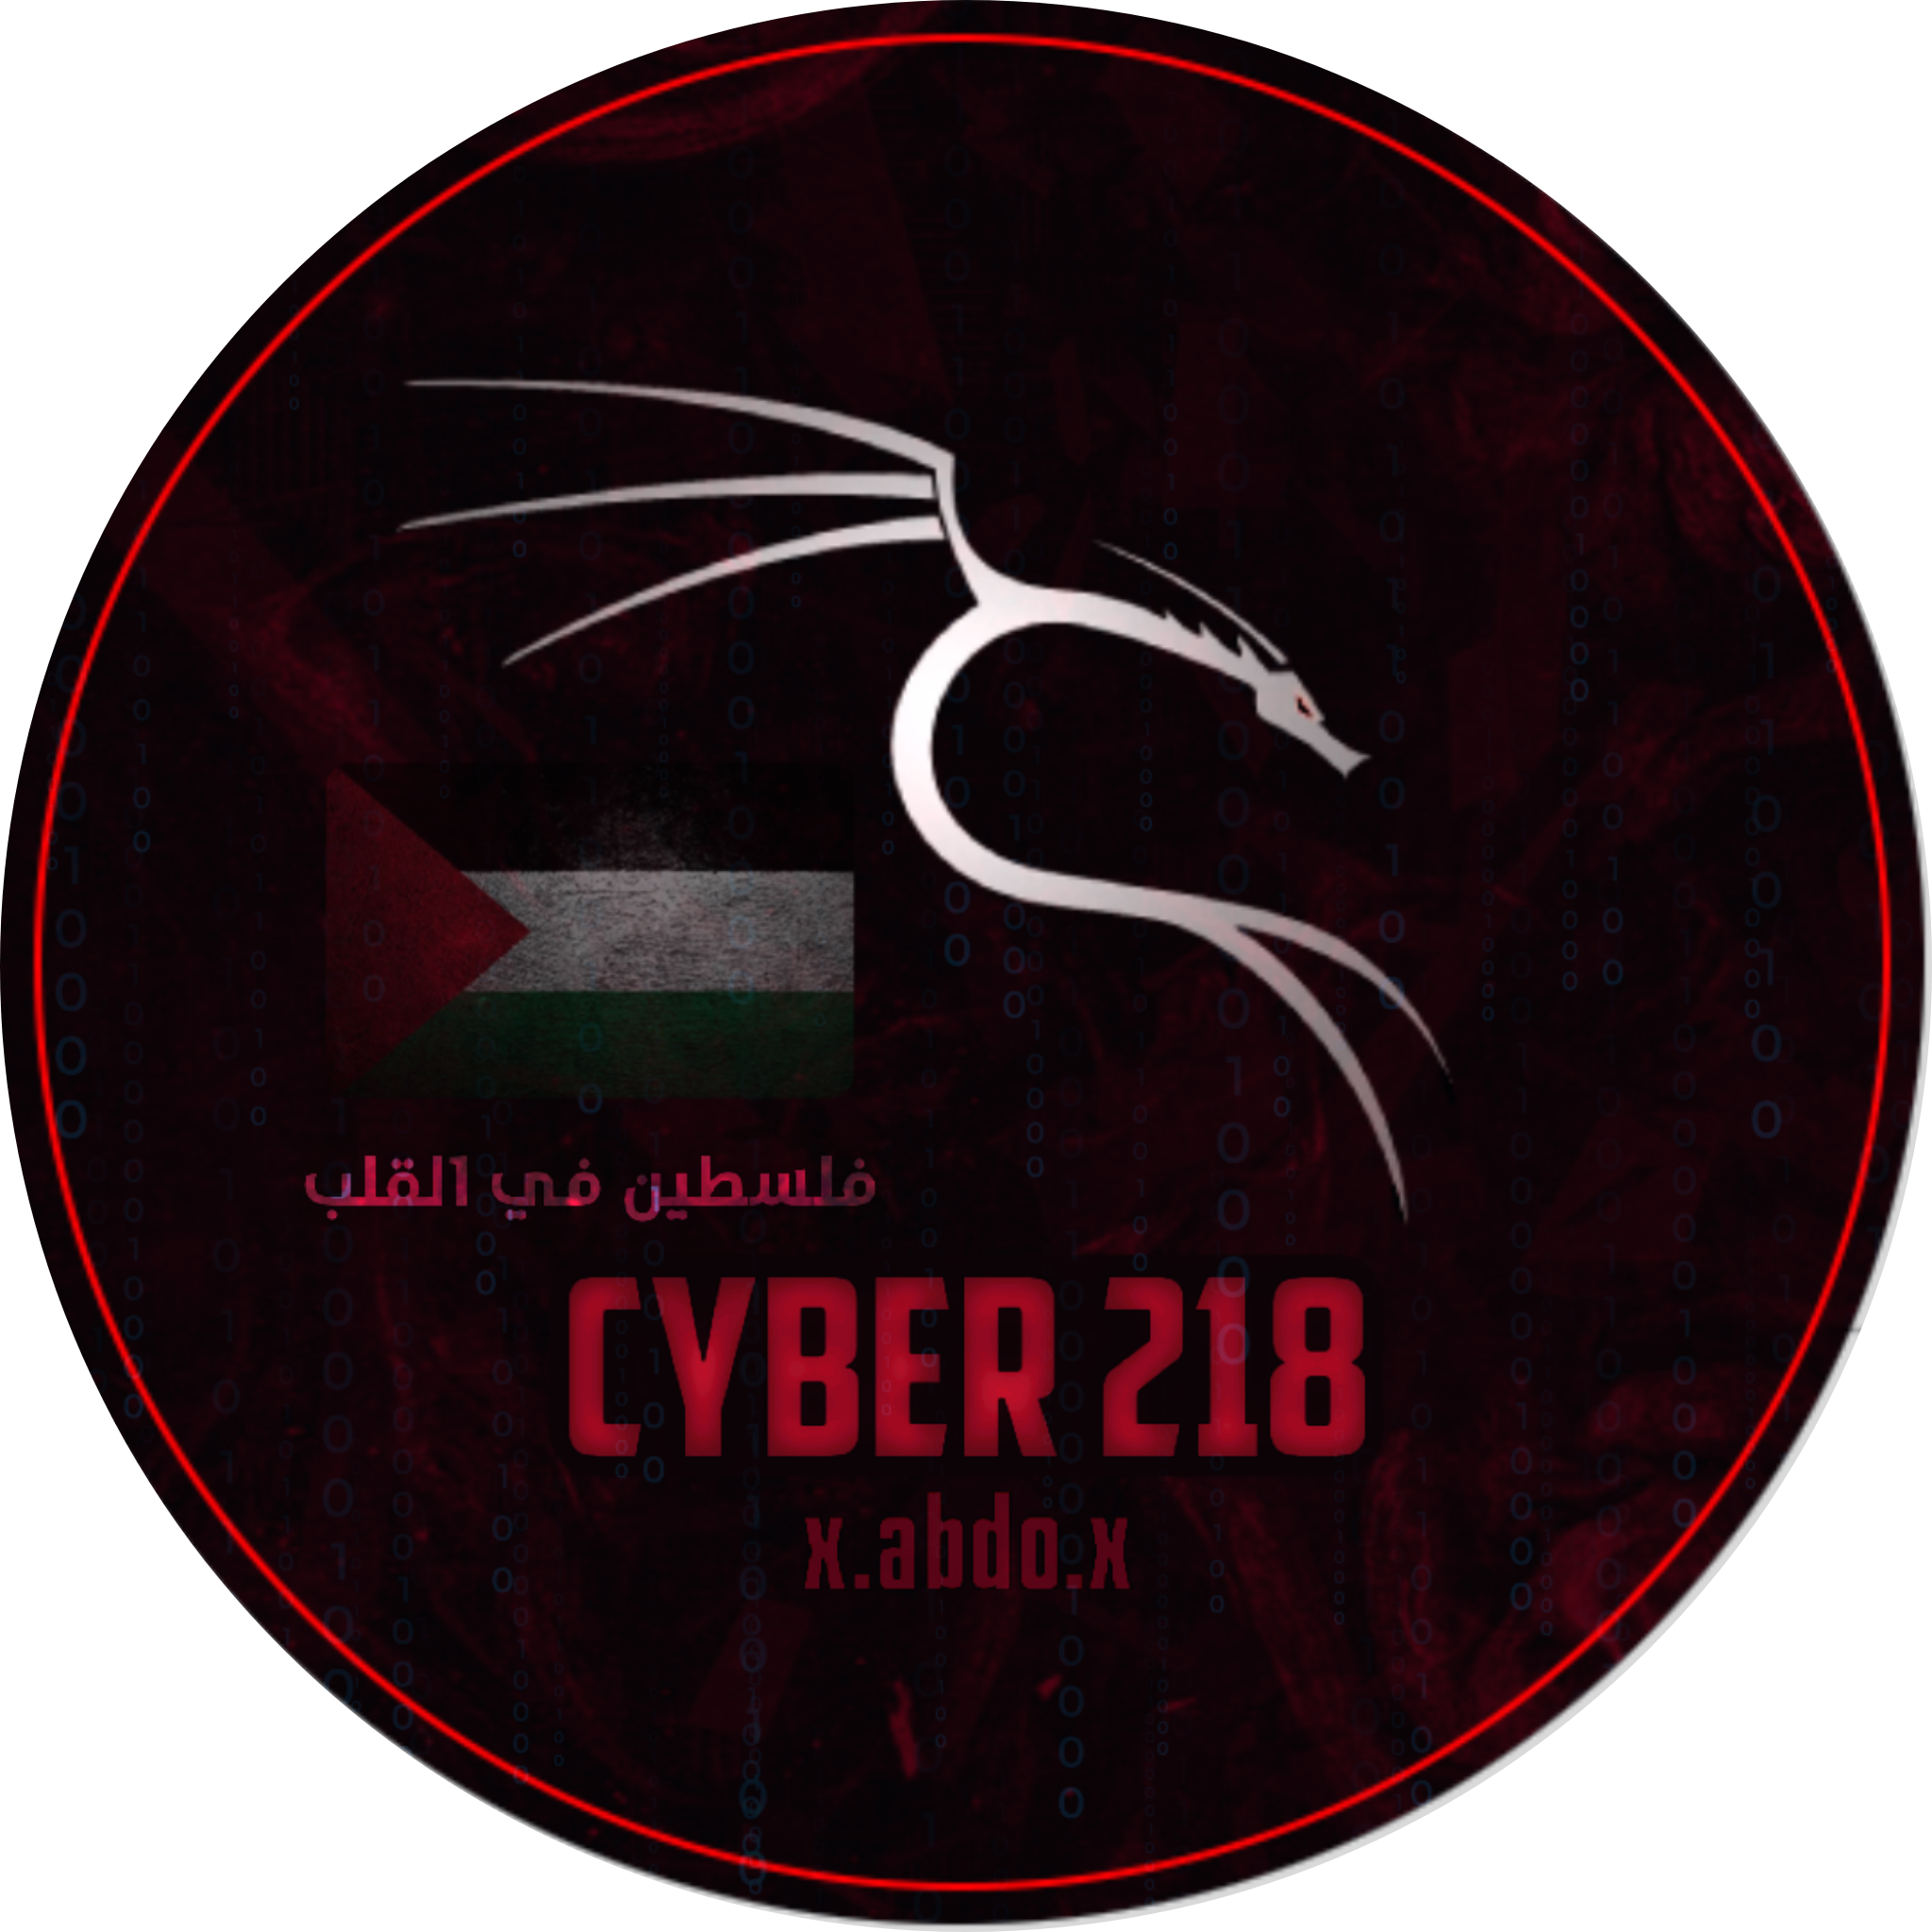 Cyber 218